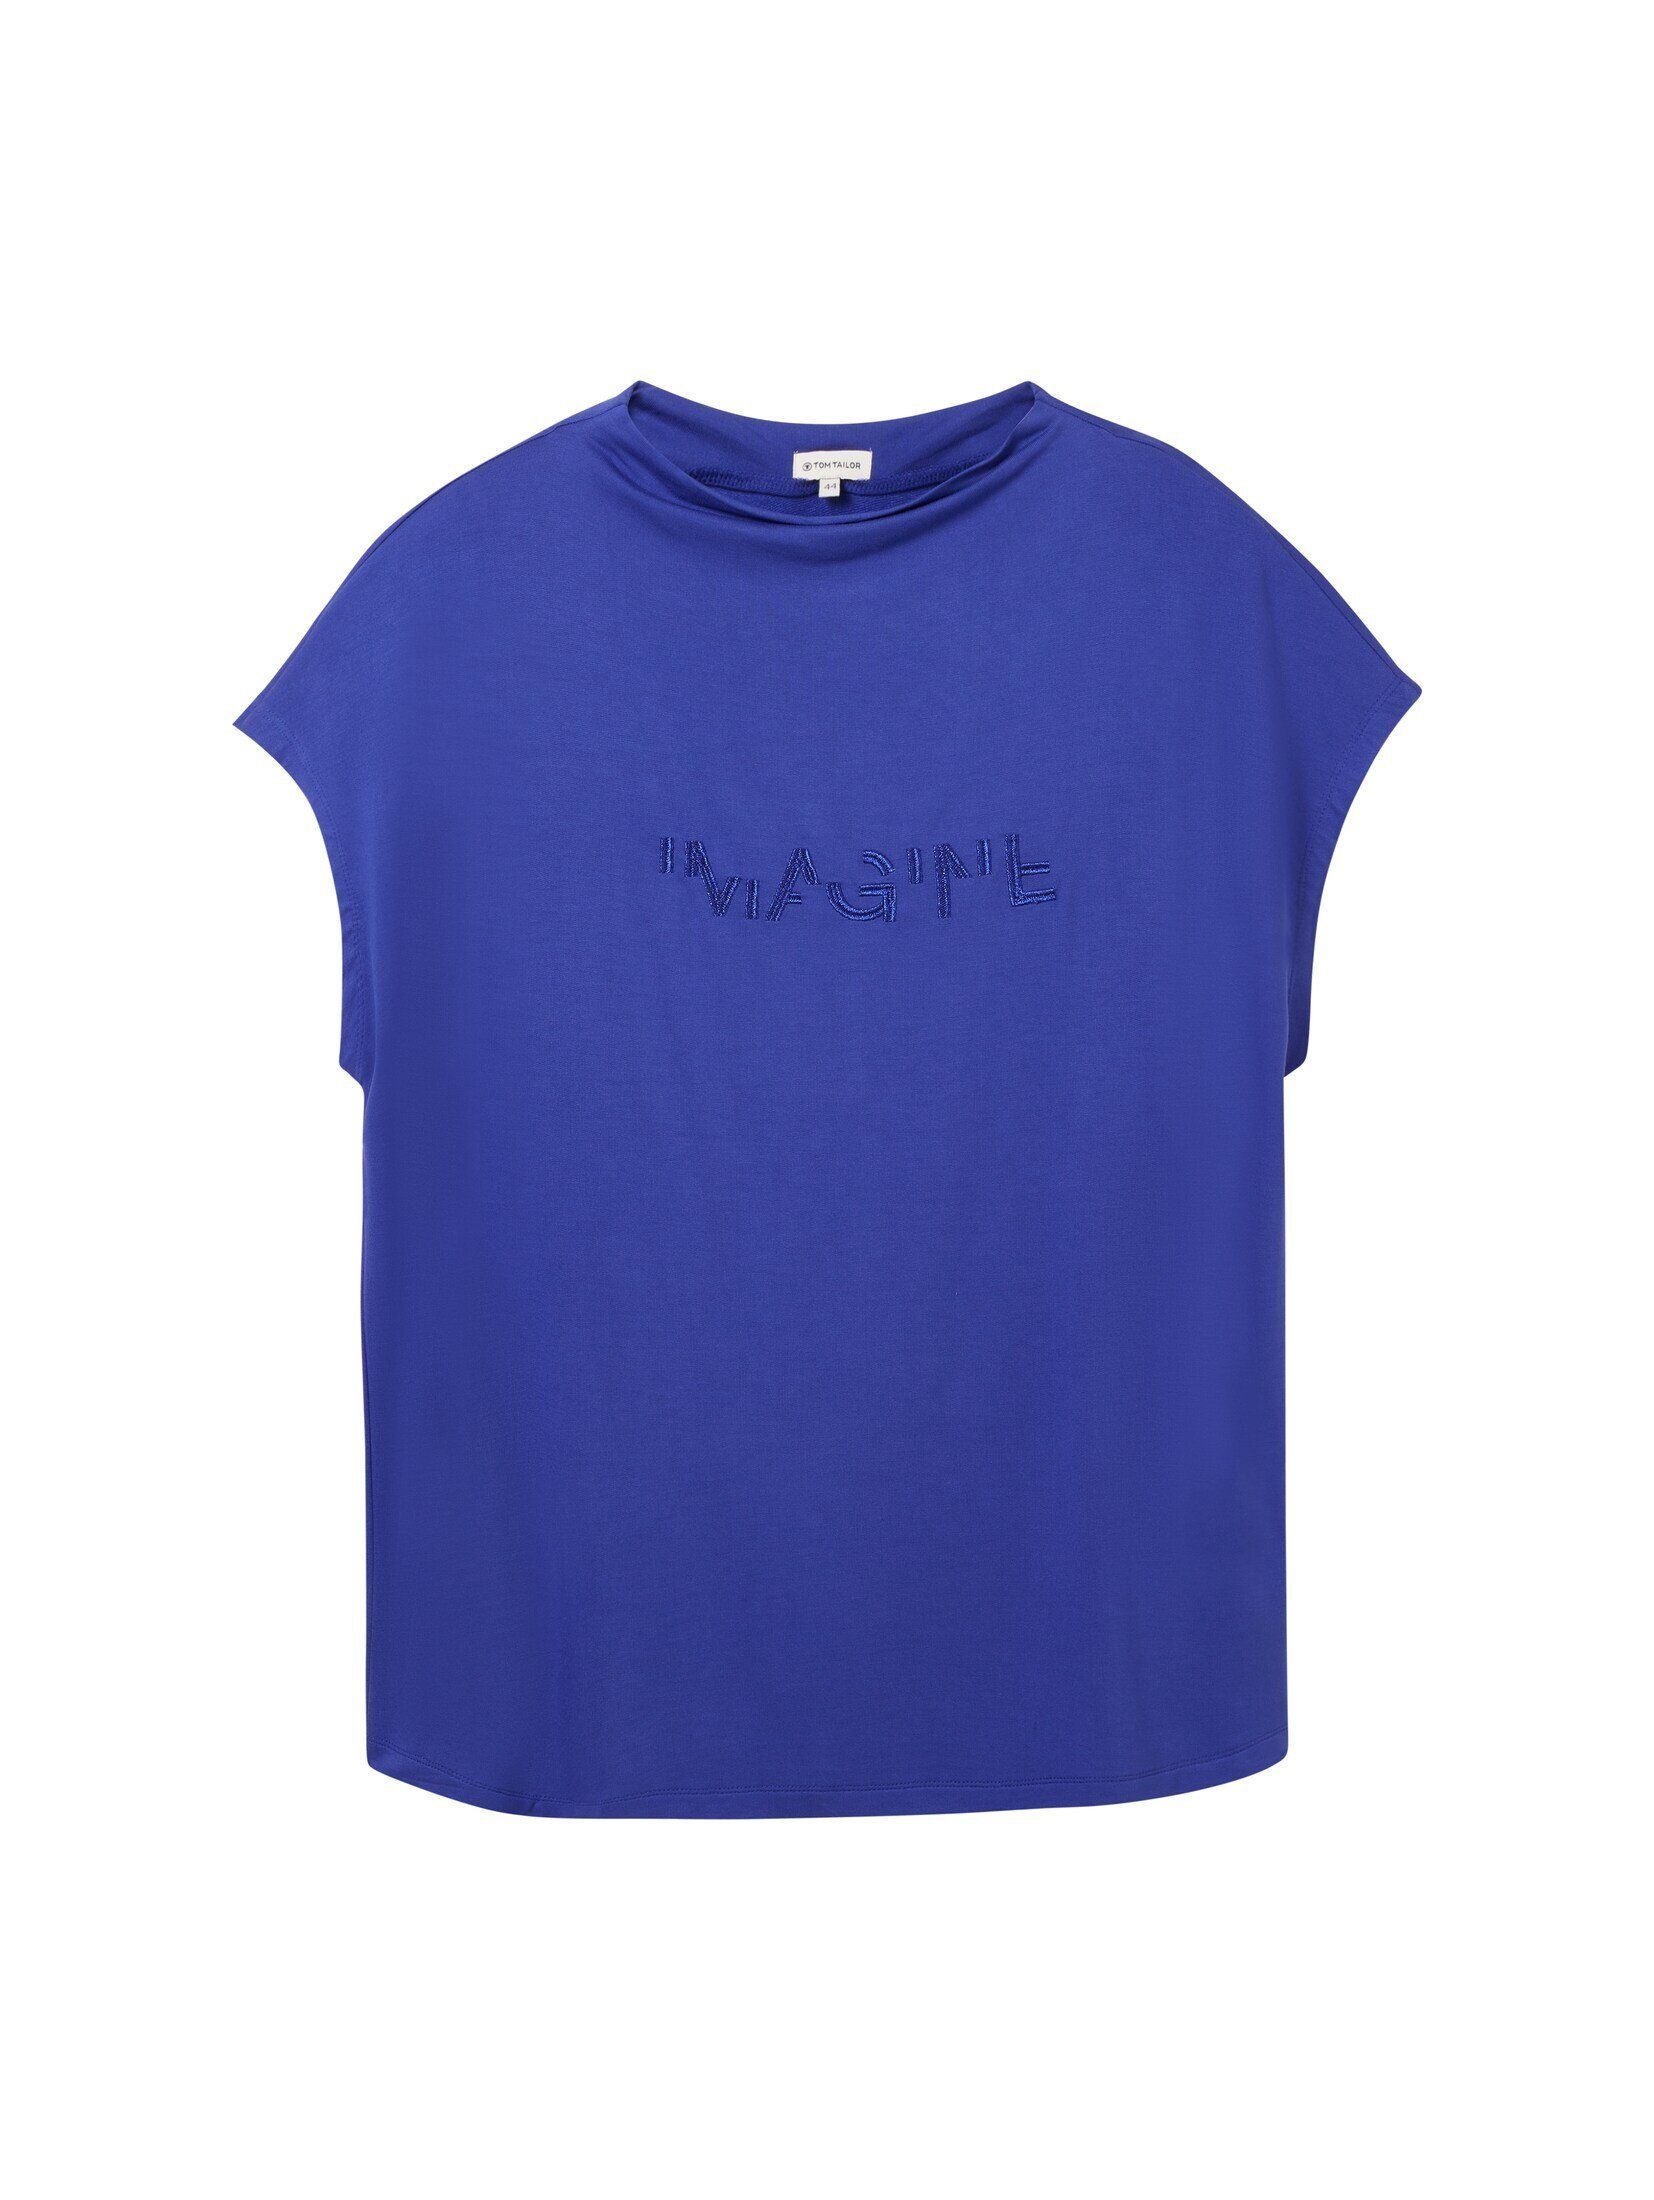 Plus T-Shirt TOM TAILOR blue crest T-Shirt mit PLUS Stehkragen -